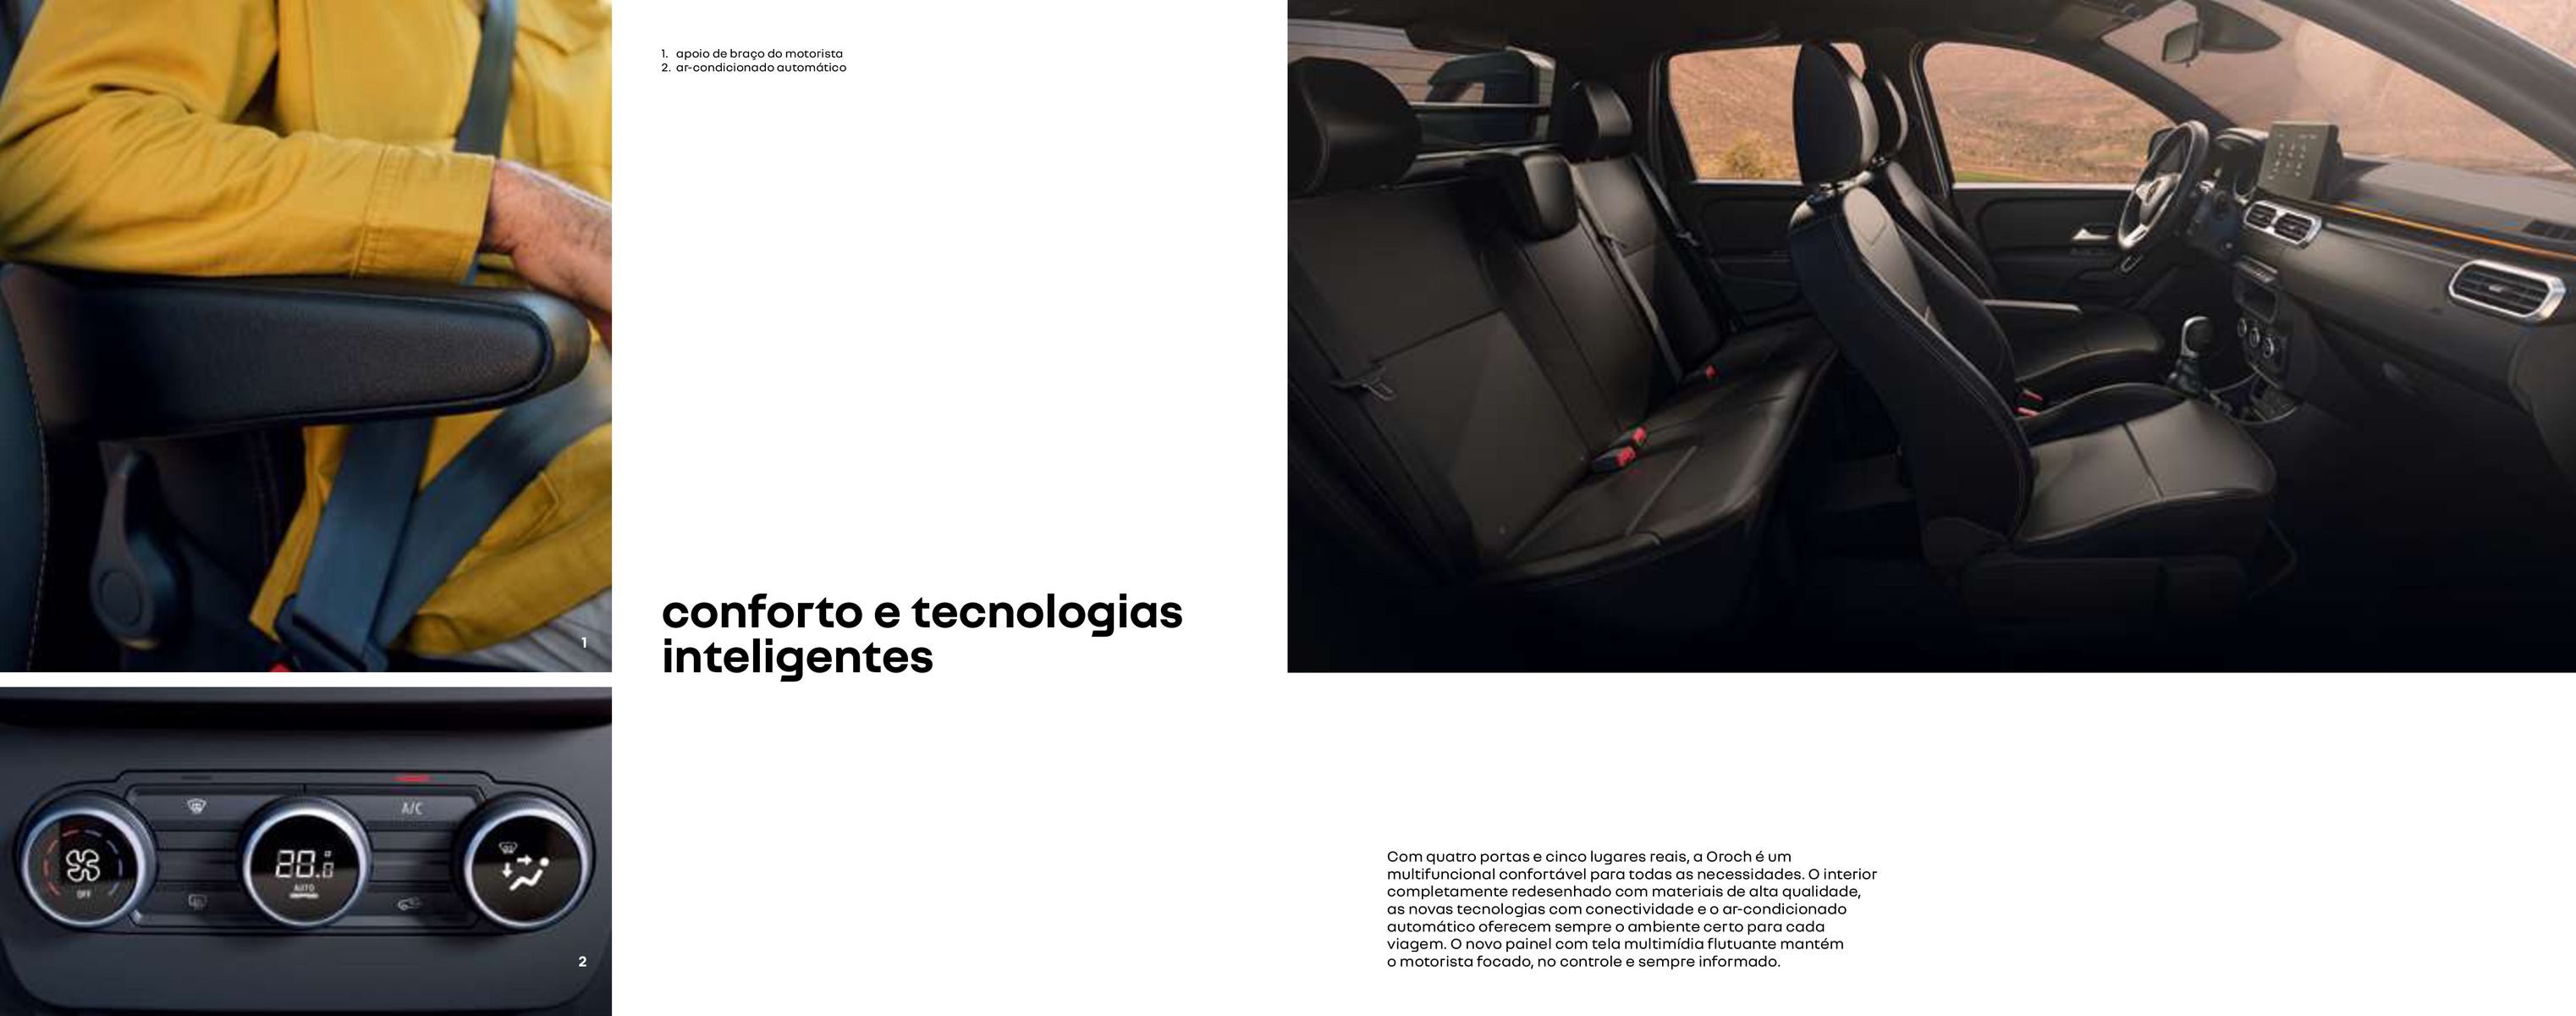 Desconto na Renault Oroch - Conforto e tecnologias inteligentes